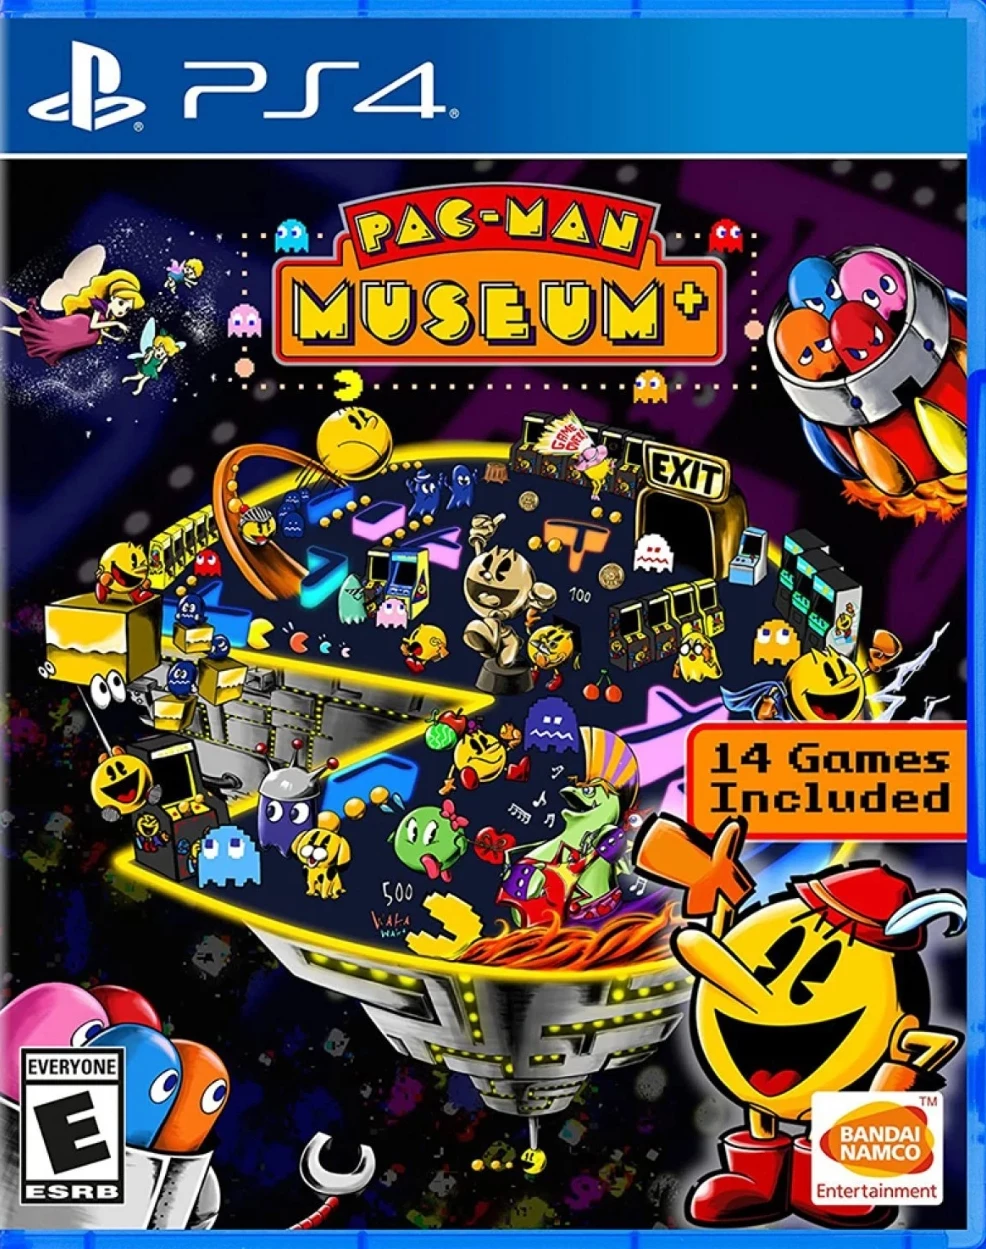 Pac-Man Museum + (USA Import) (PS4), Bandai Namco